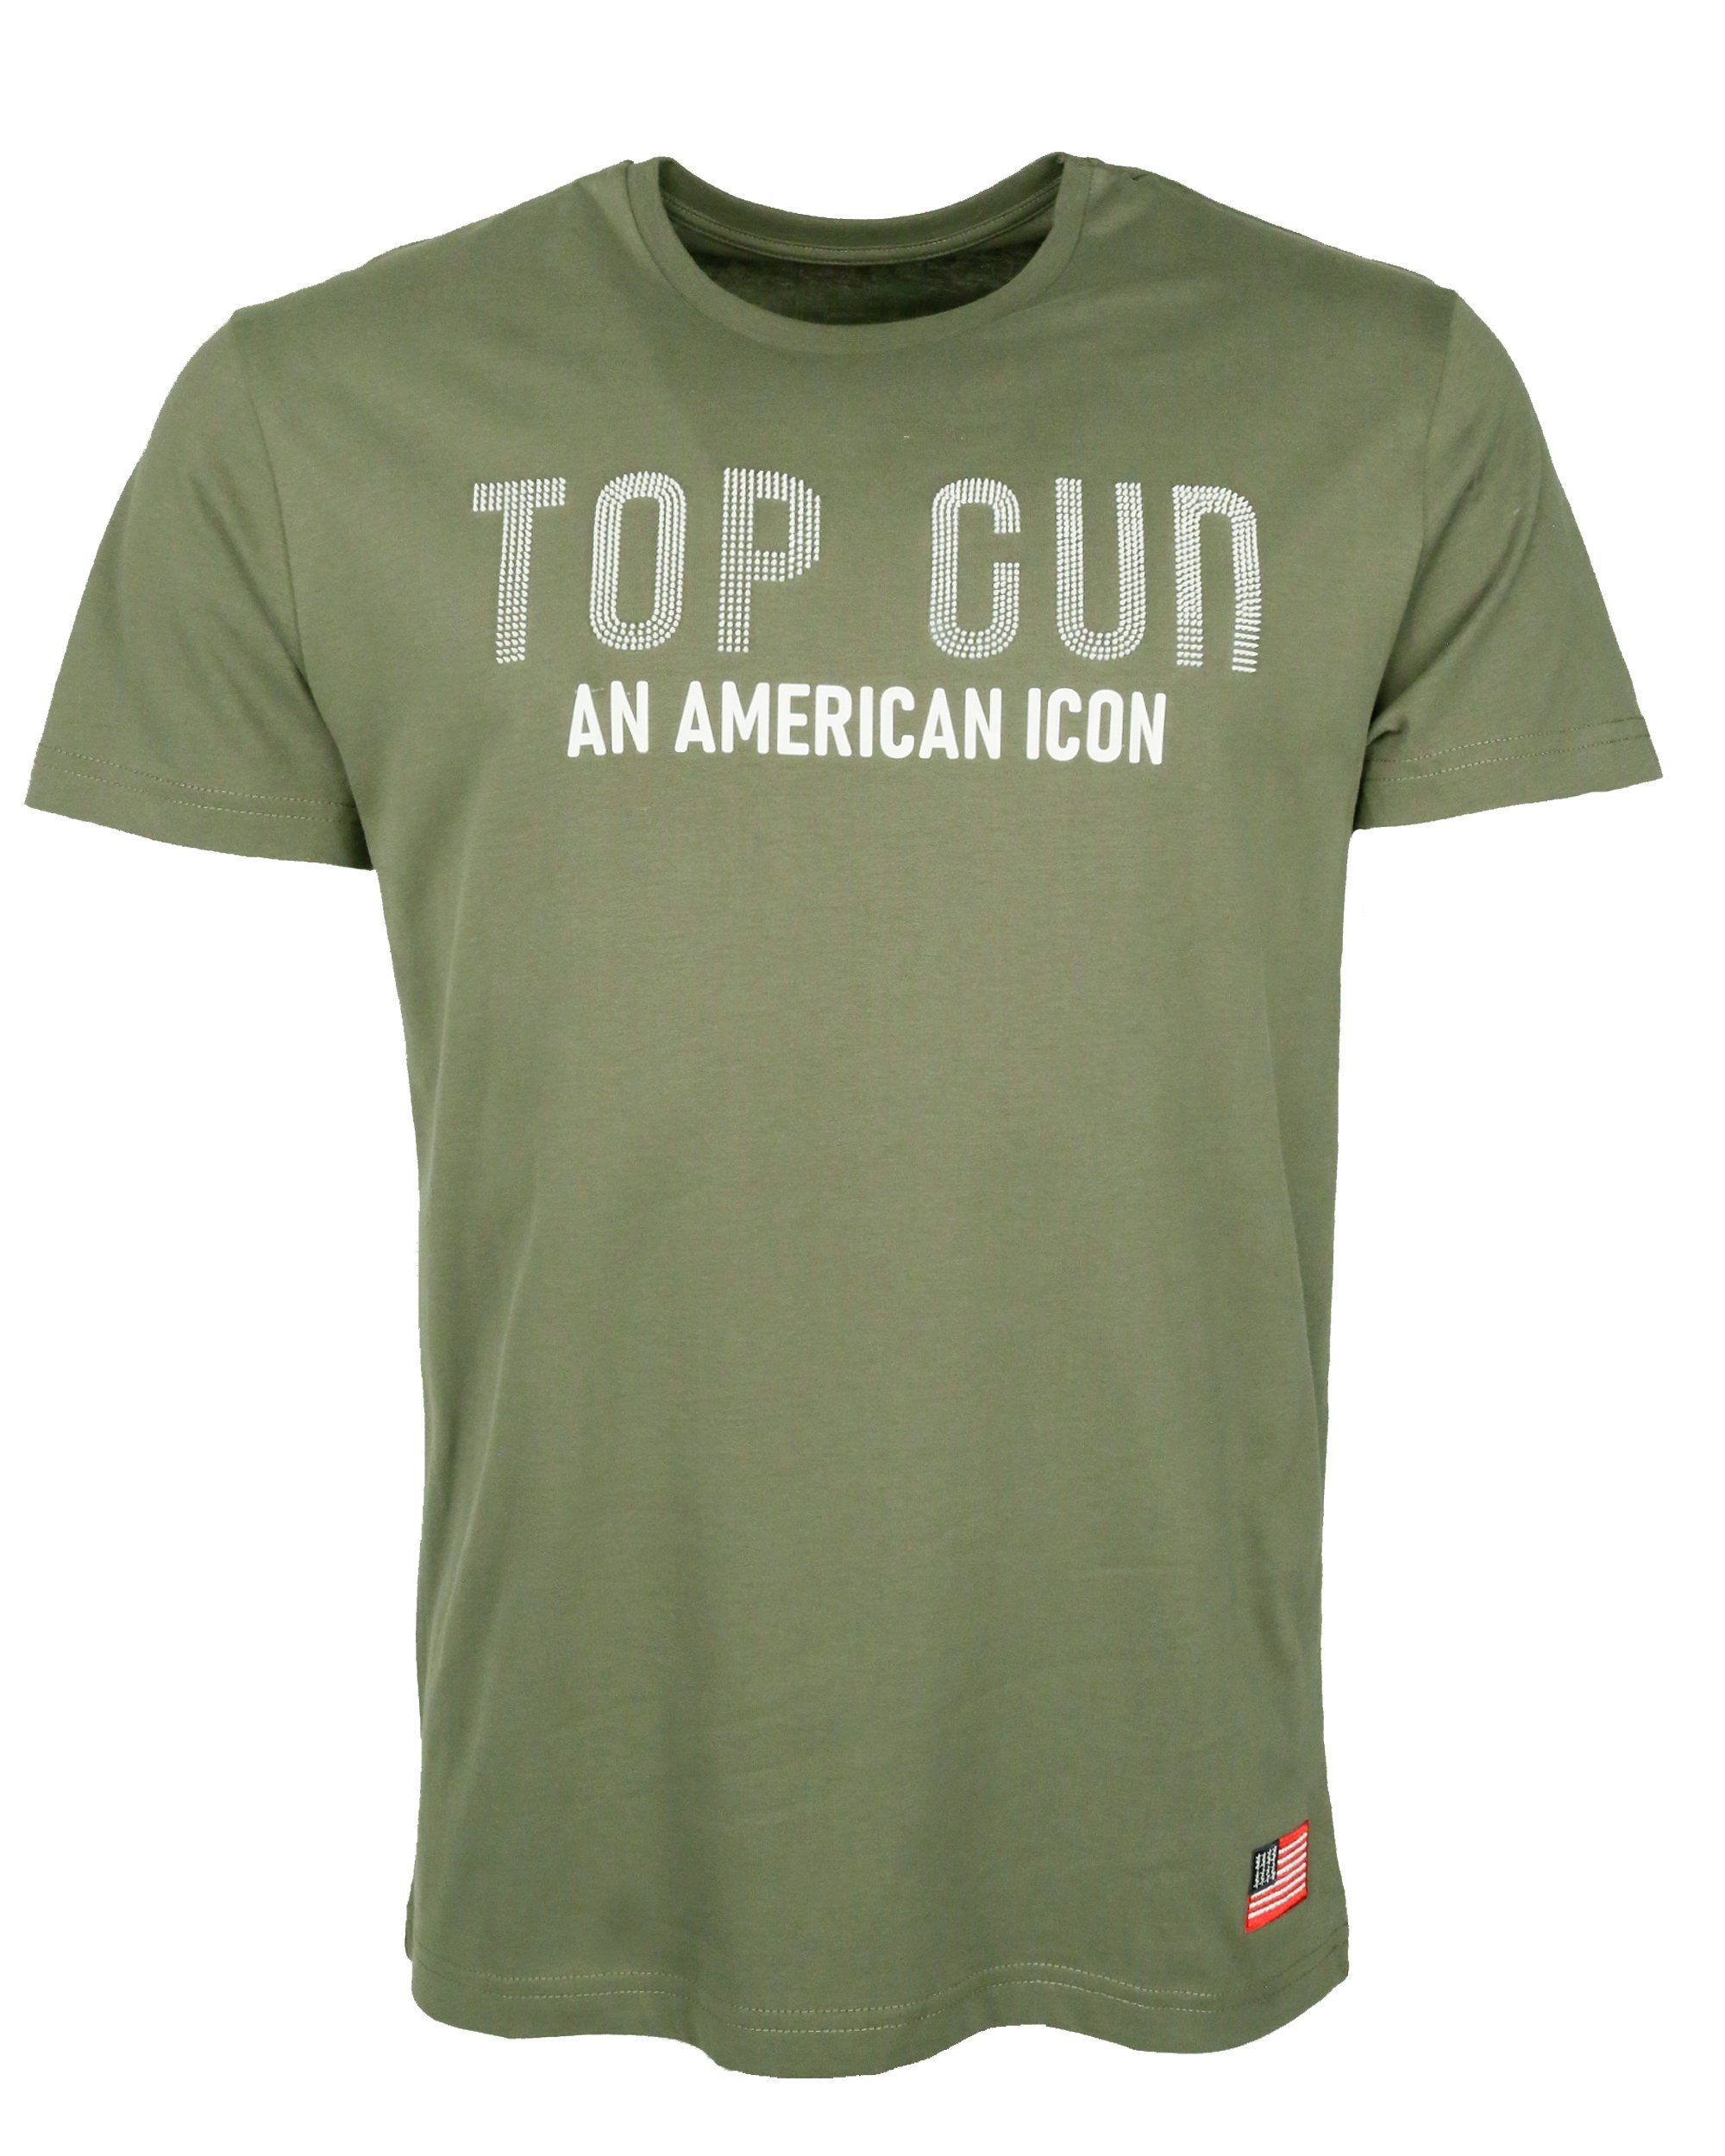 TOP TG20212009 T-Shirt olive GUN